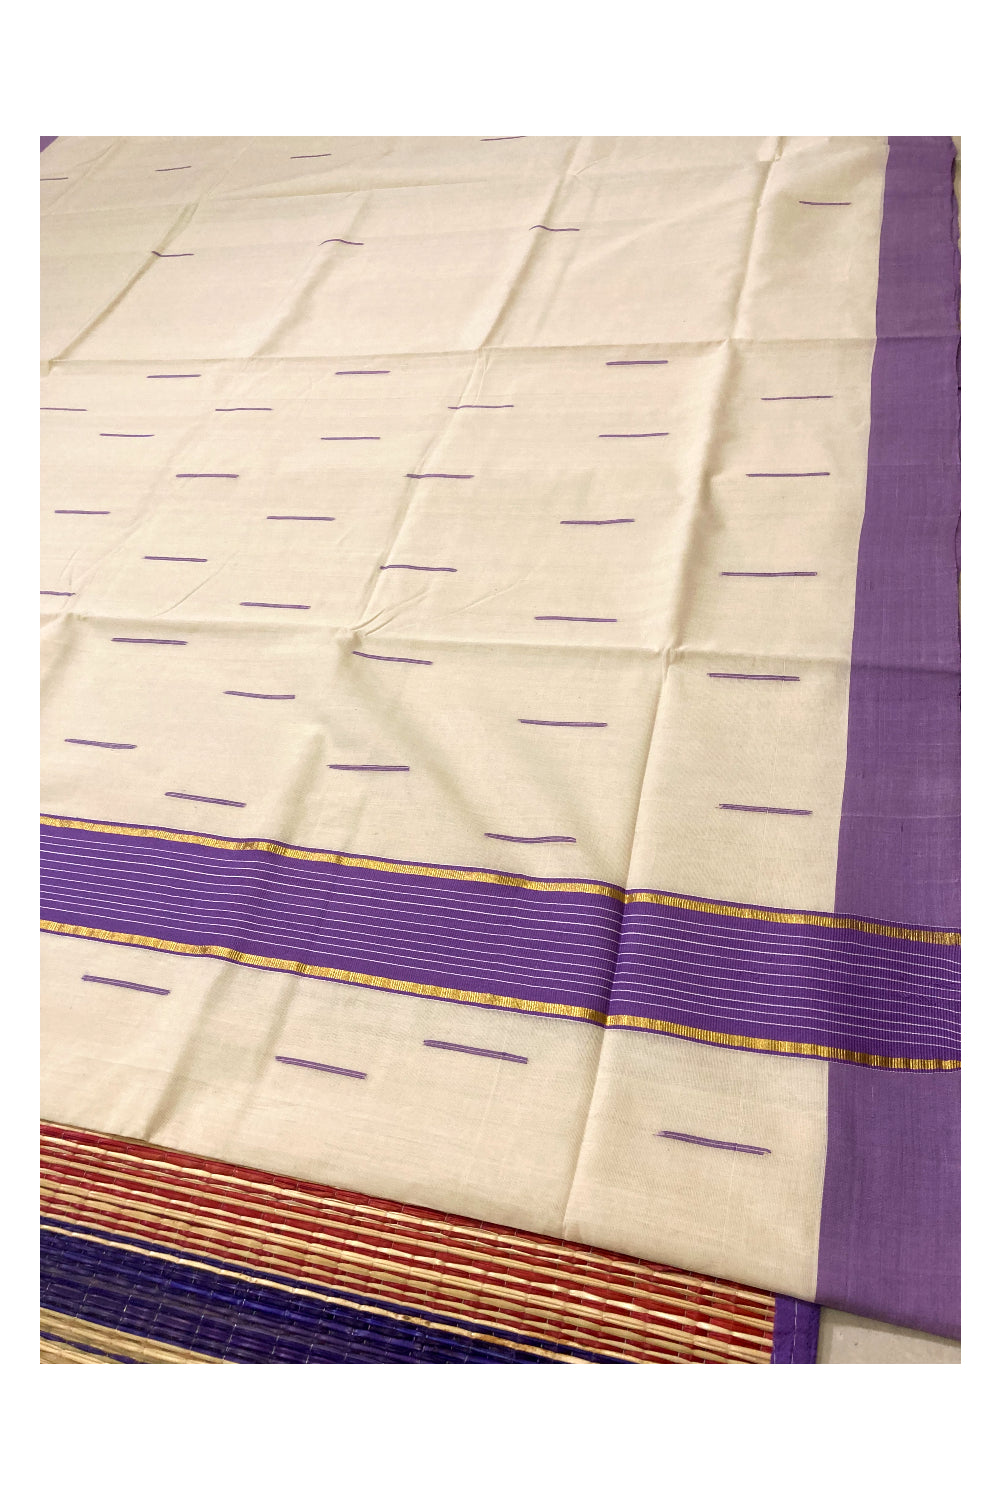 Southloom Premium Unakkupaavu Handloom Kerala Saree with Violet and Pure Kasavu Border and Butta Works on Body